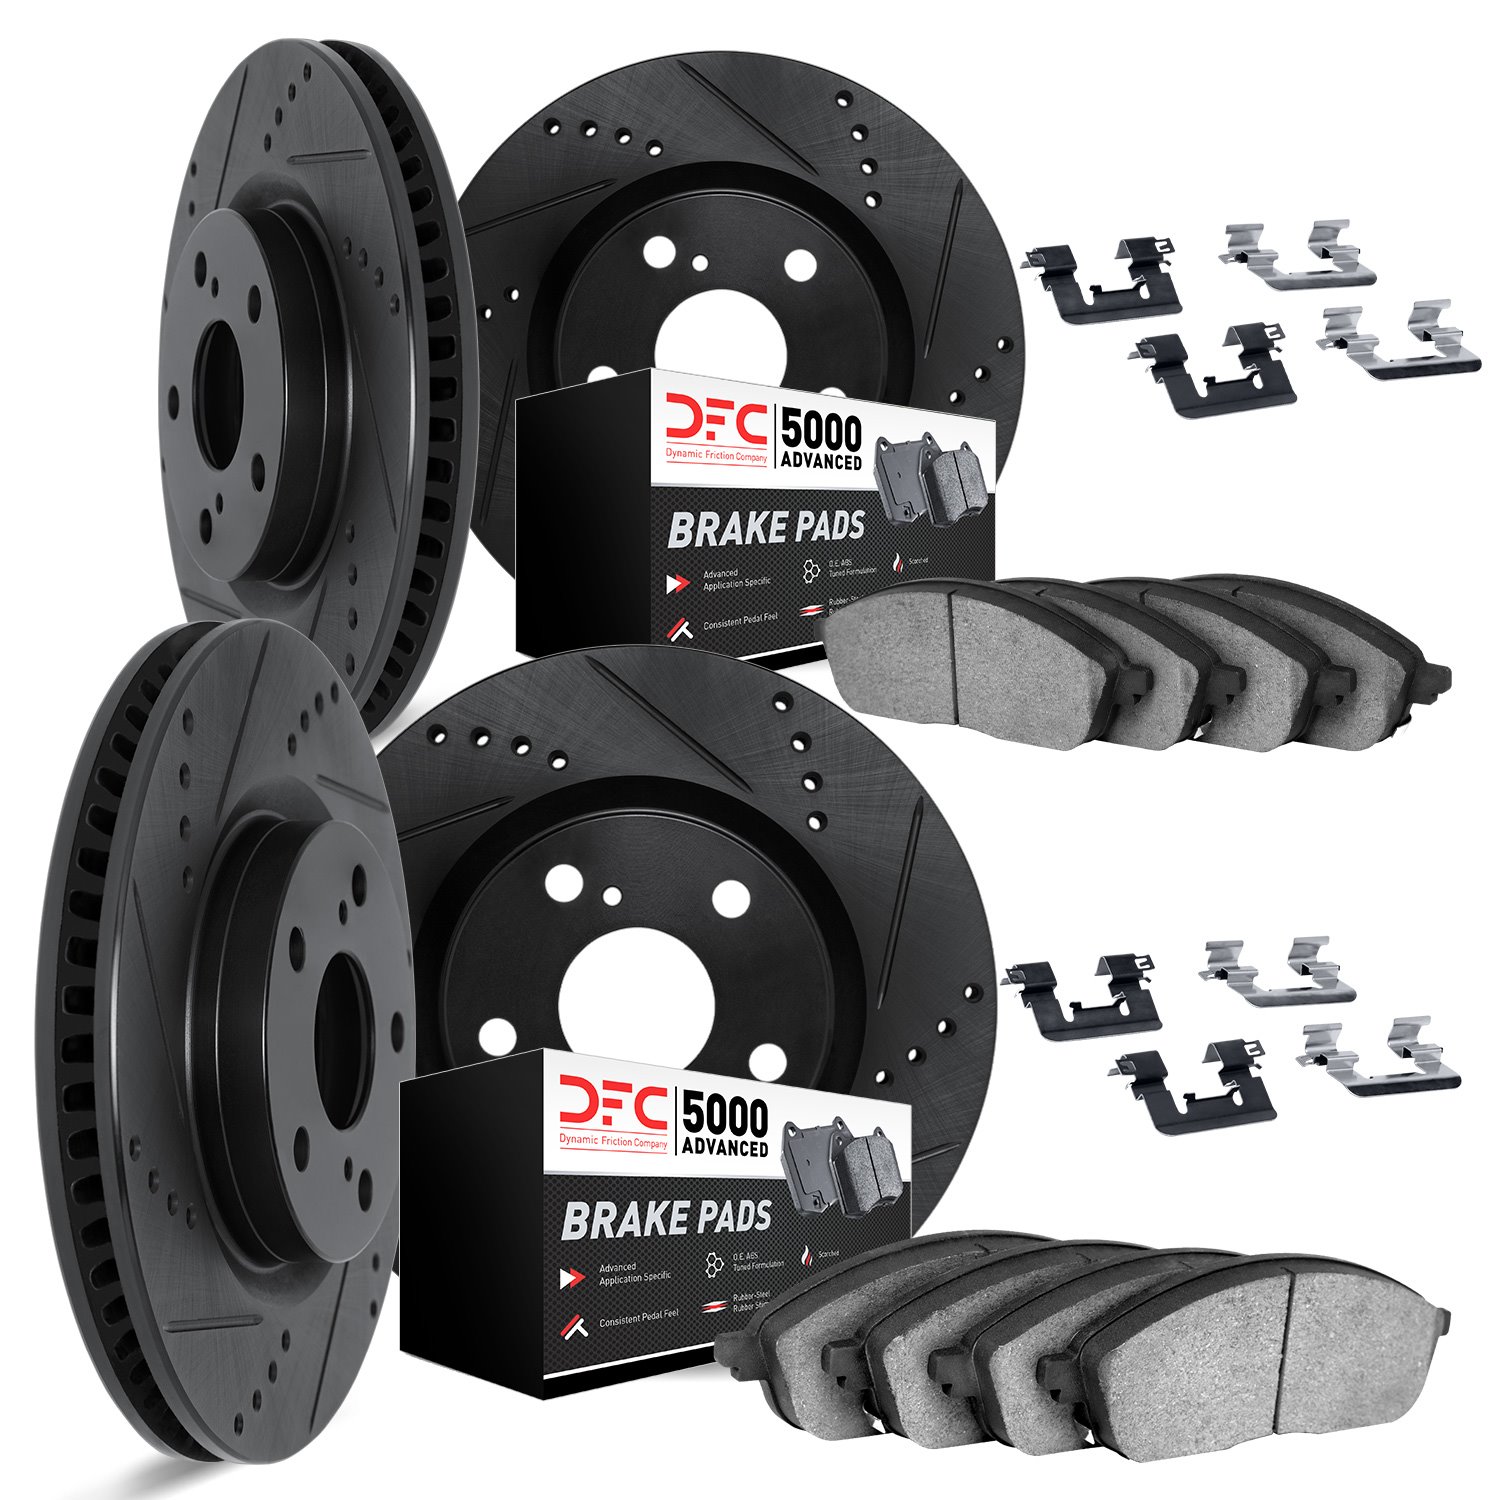 8514-21022 Drilled/Slotted Brake Rotors w/5000 Advanced Brake Pads Kit & Hardware [Black], Fits Select Kia/Hyundai/Genesis, Posi